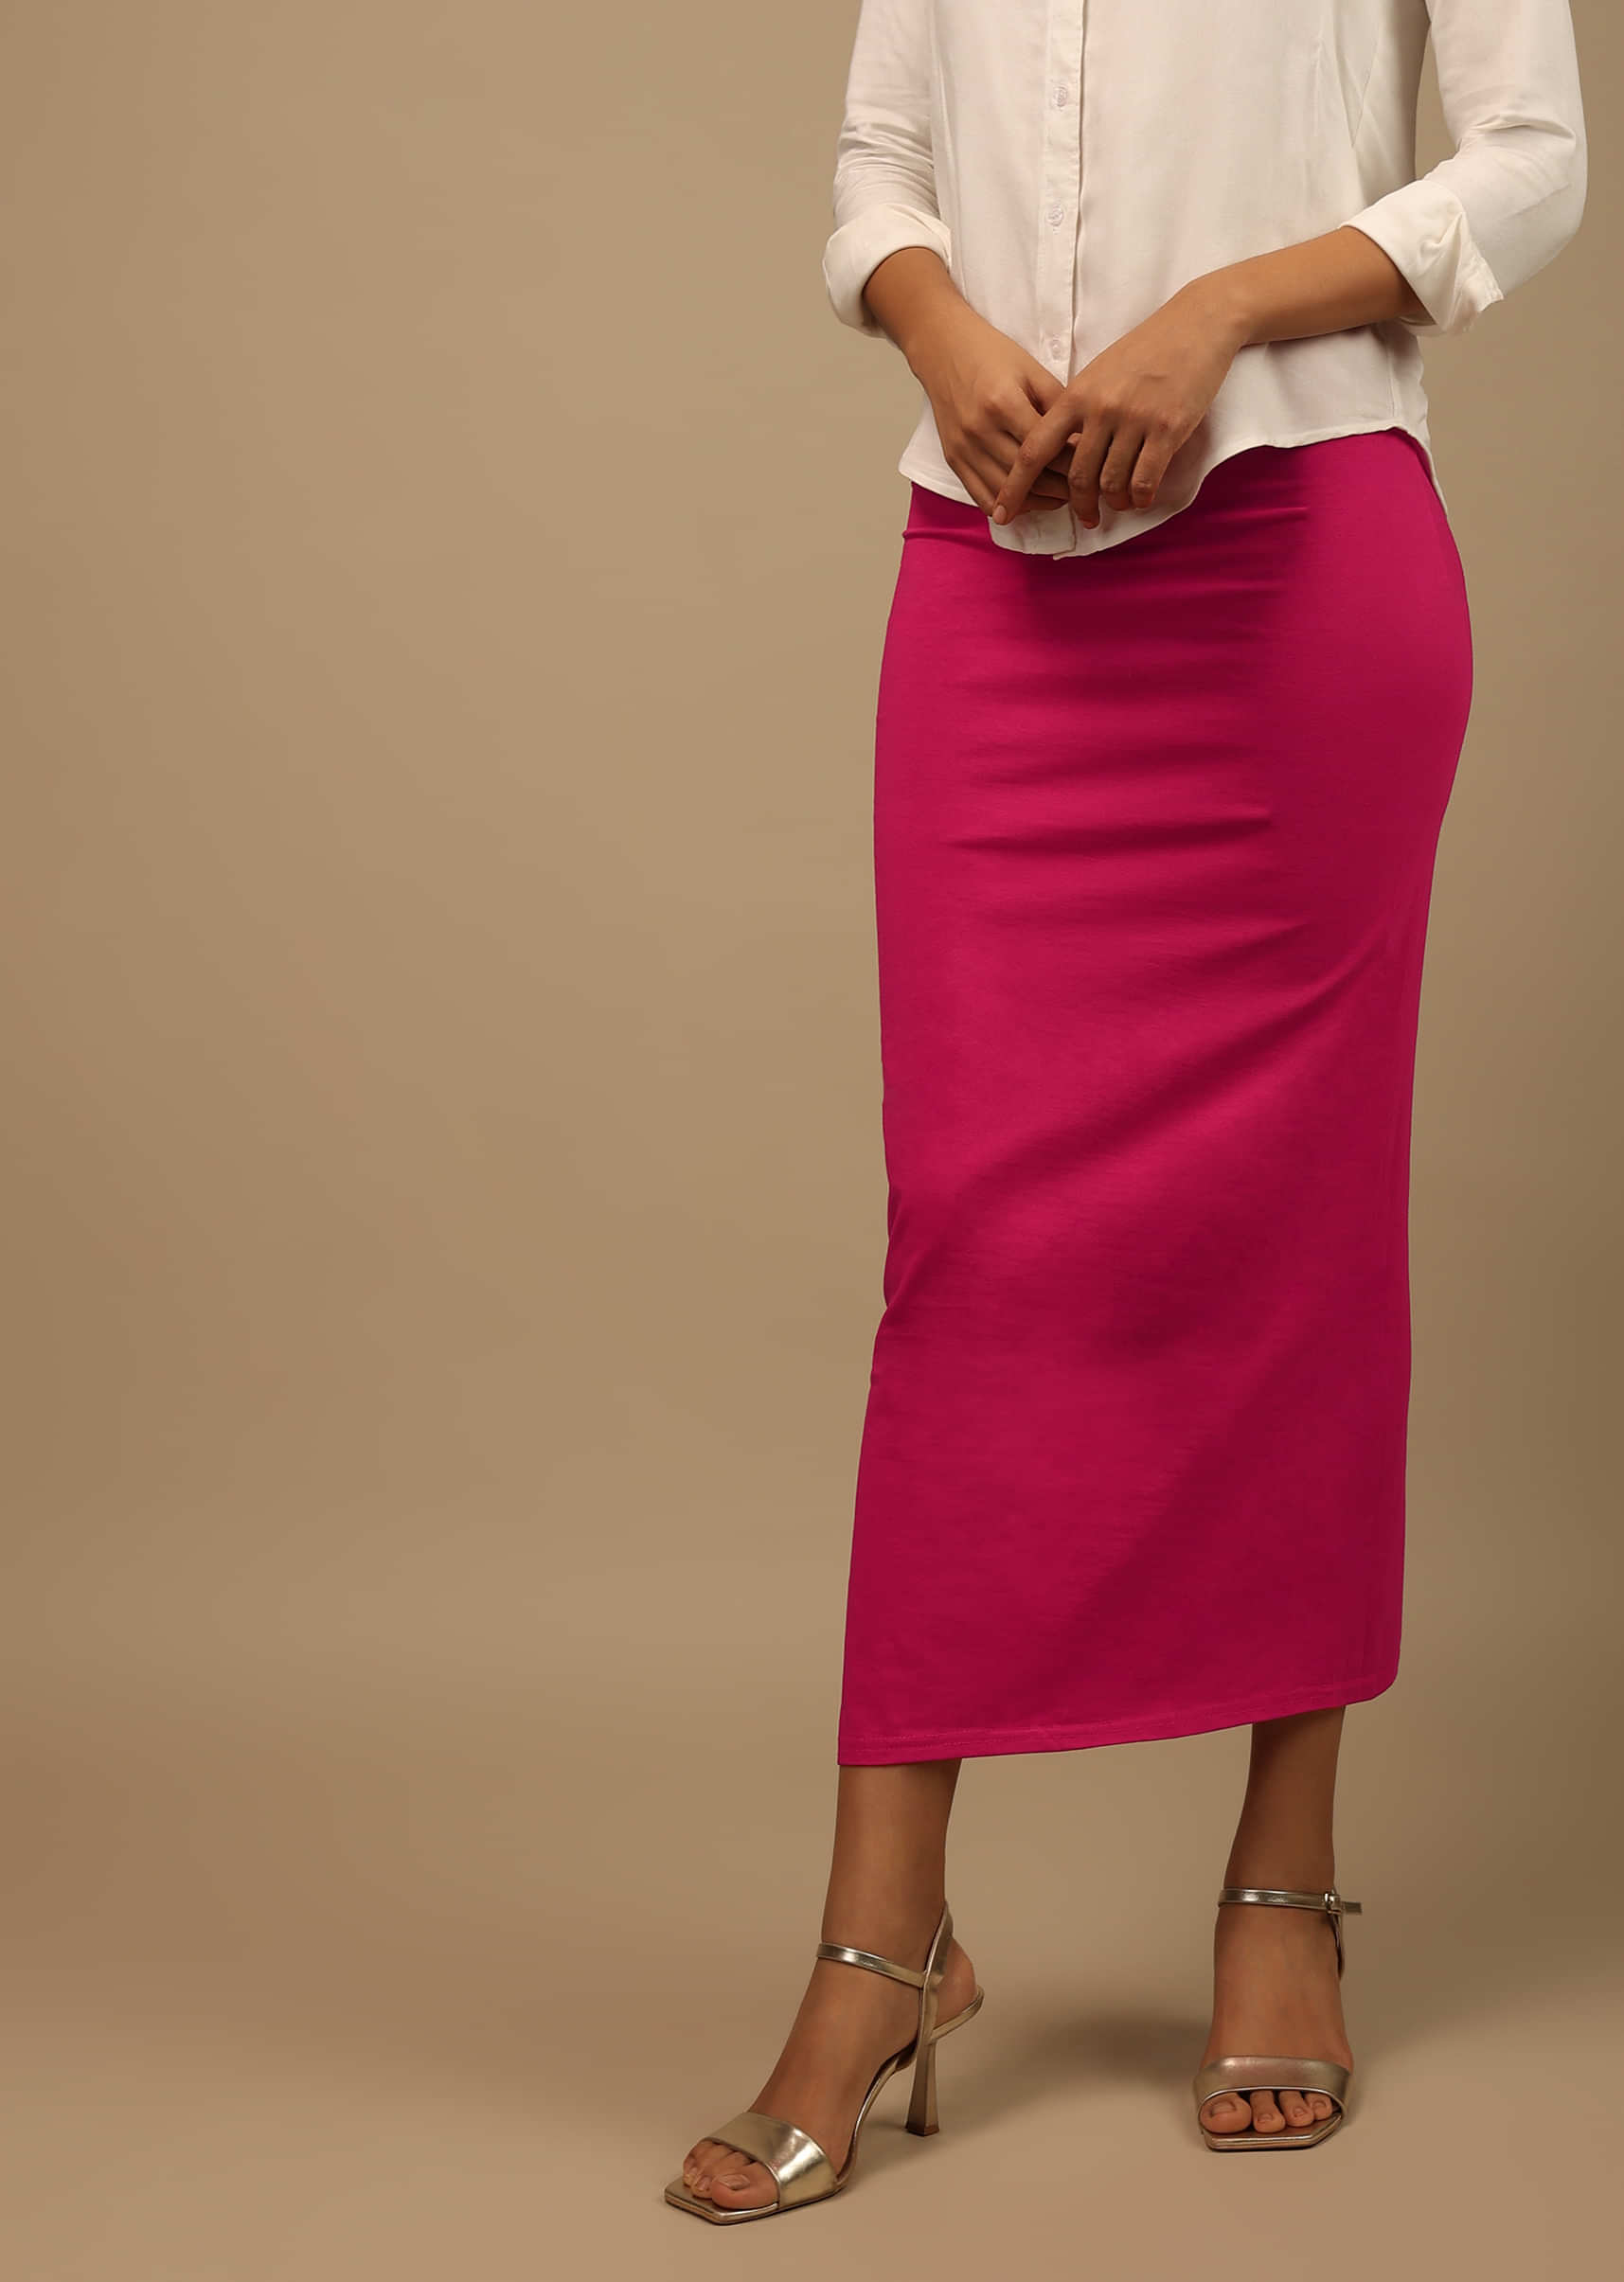 INFINI SHAPE Stylish saree shapewear Lycra Blend Petticoat Price in India -  Buy INFINI SHAPE Stylish saree shapewear Lycra Blend Petticoat online at